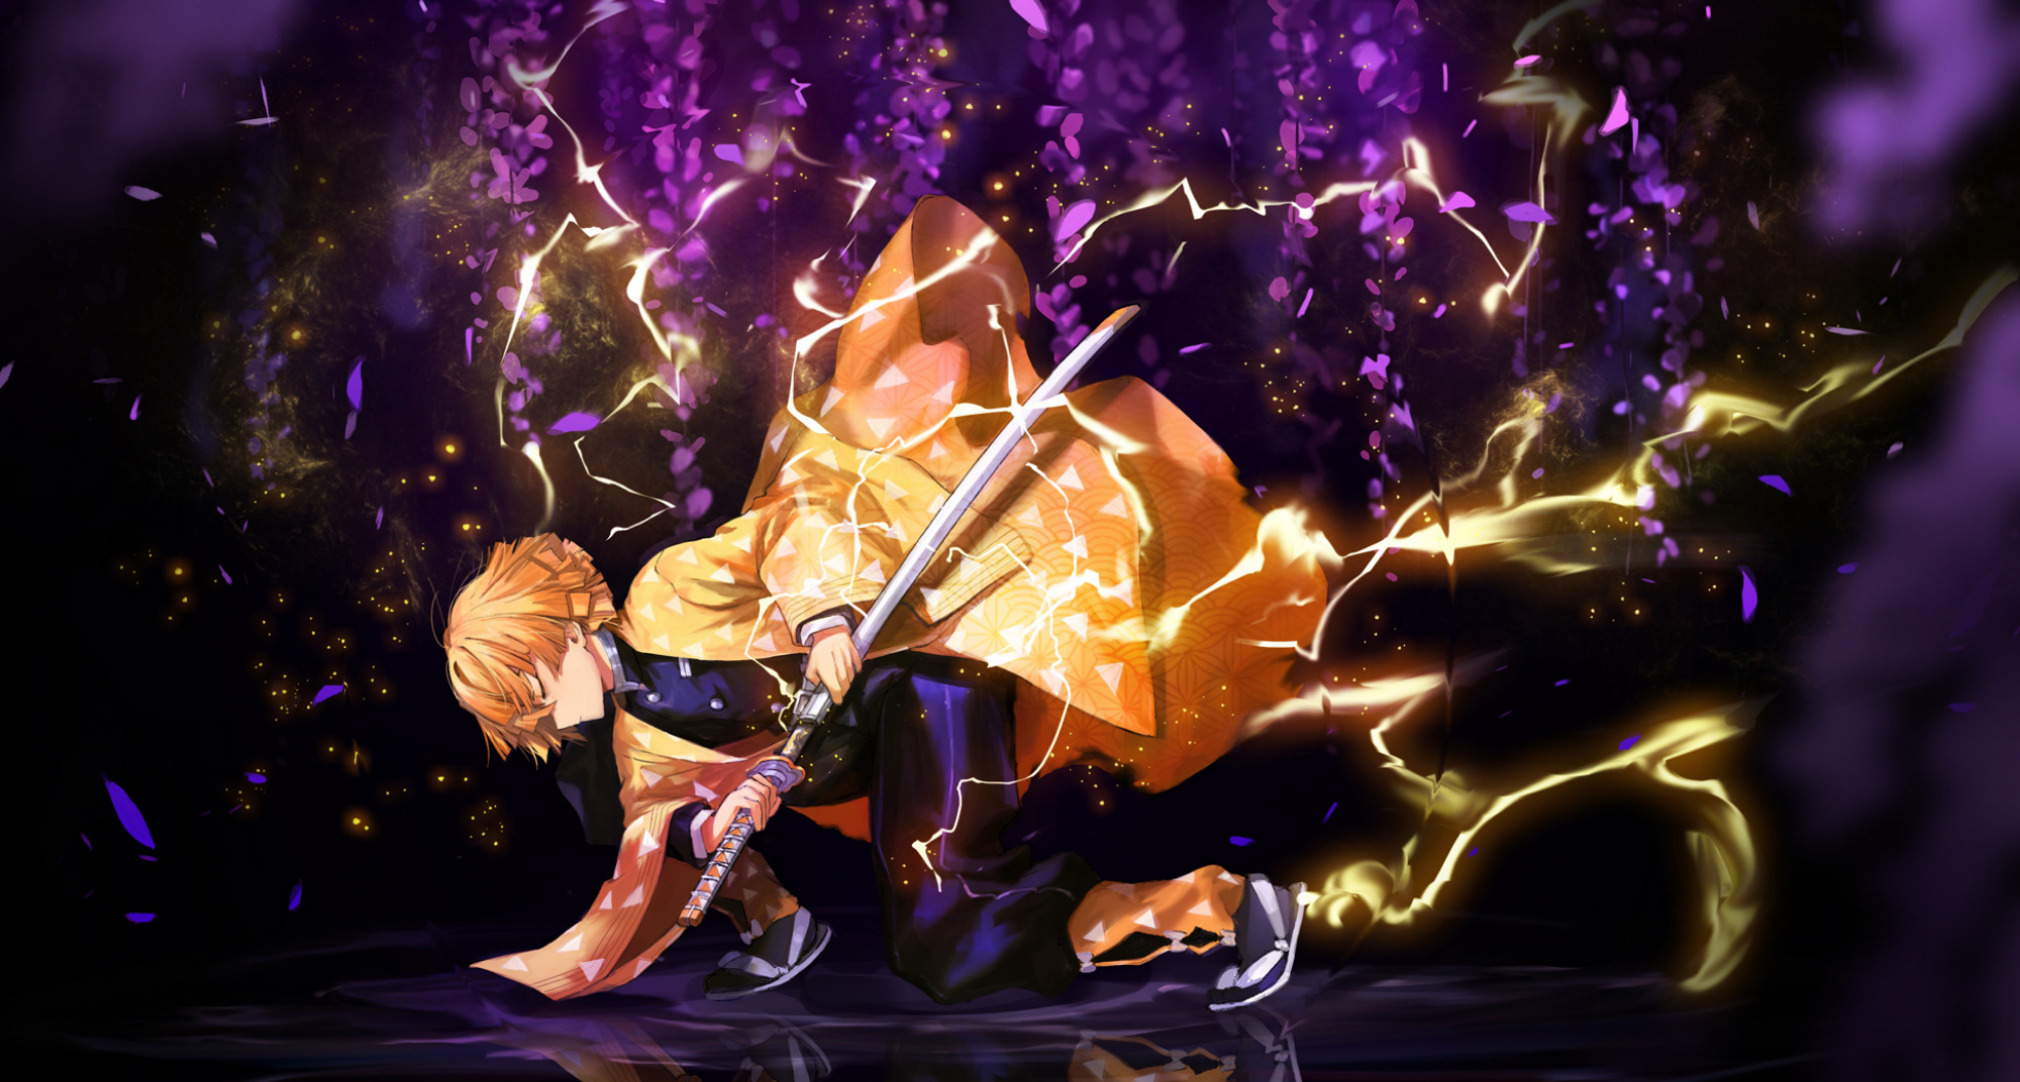 Demon Slayer: Kimetsu no Yaiba HD Wallpaper and Background